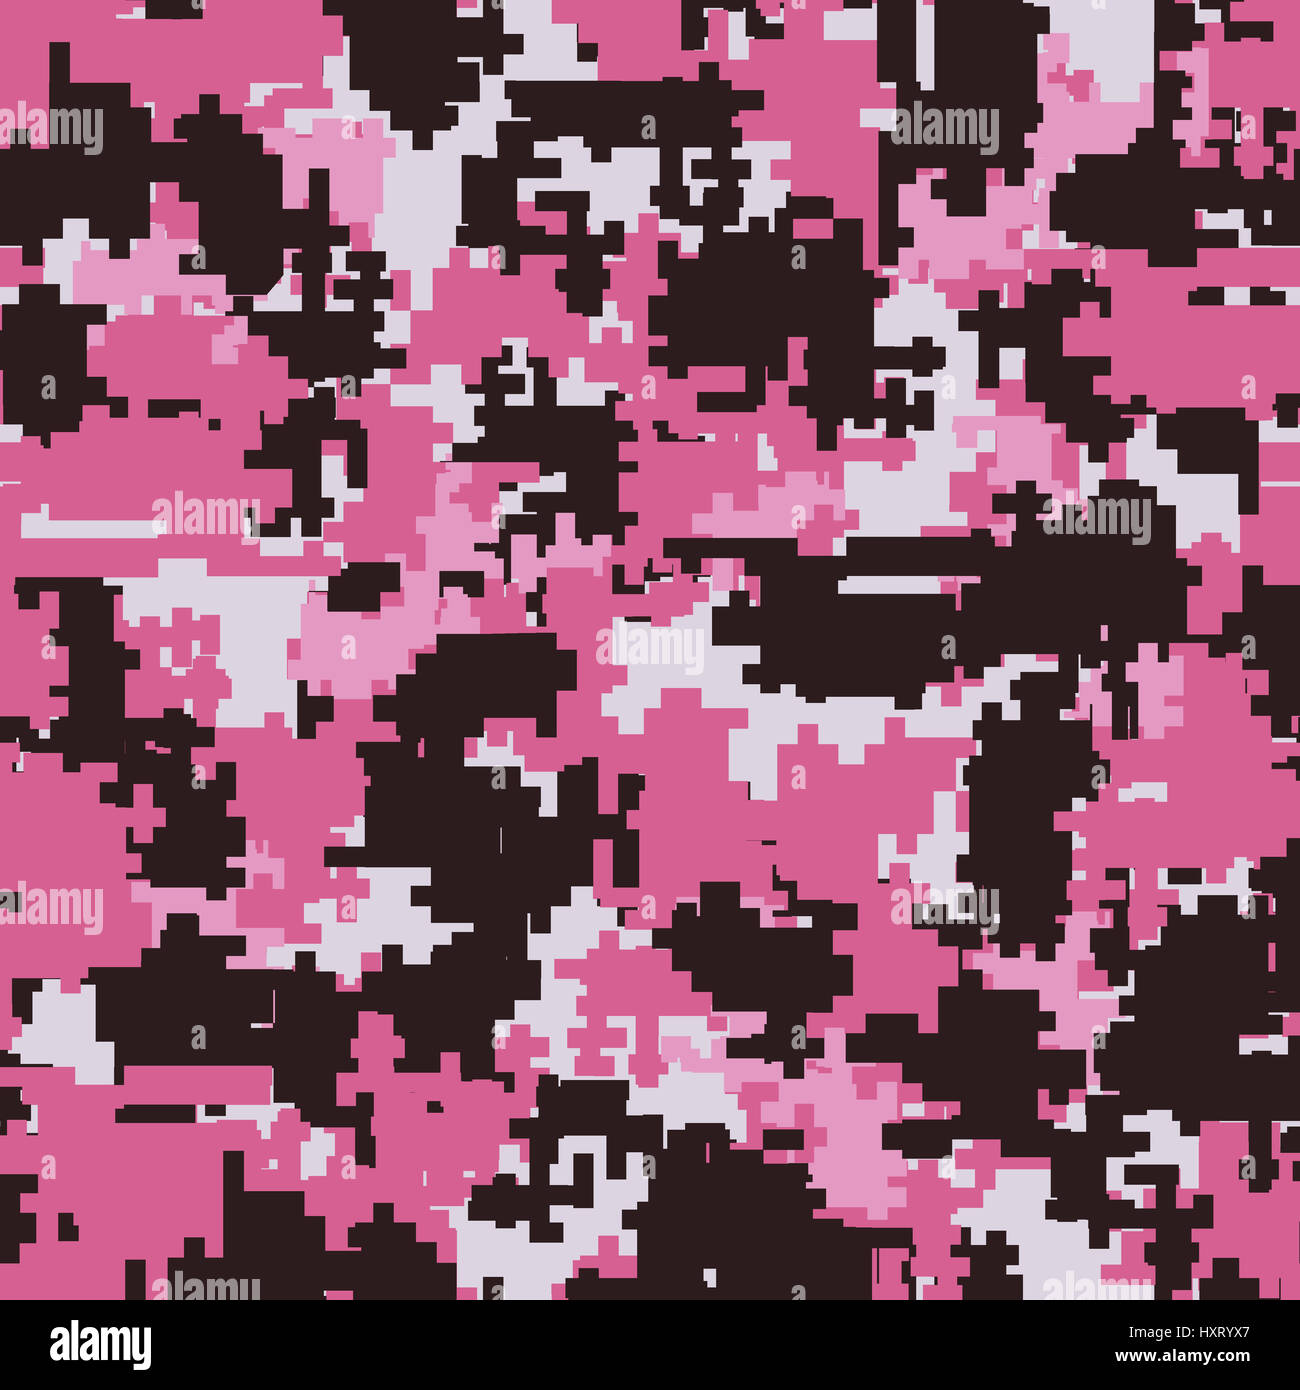 Digital camouflage seamless patterns Stock Photo